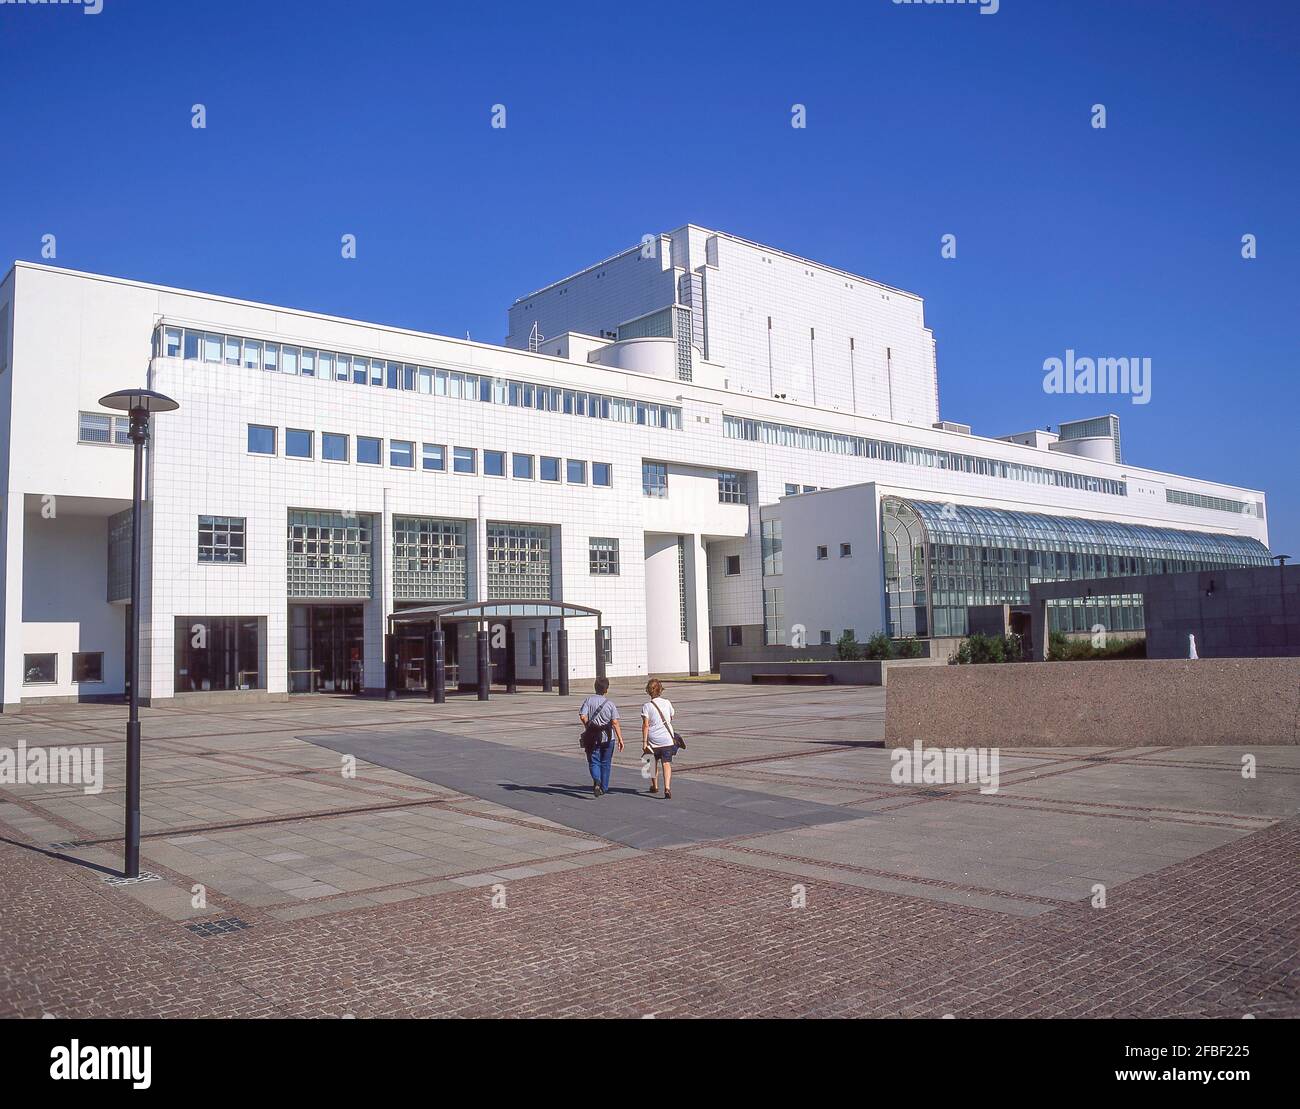 Opéra national finlandais (Suomen Kansallisoopppera), Läntinen Teatterikuja, Helsinki, République de Finlande Banque D'Images